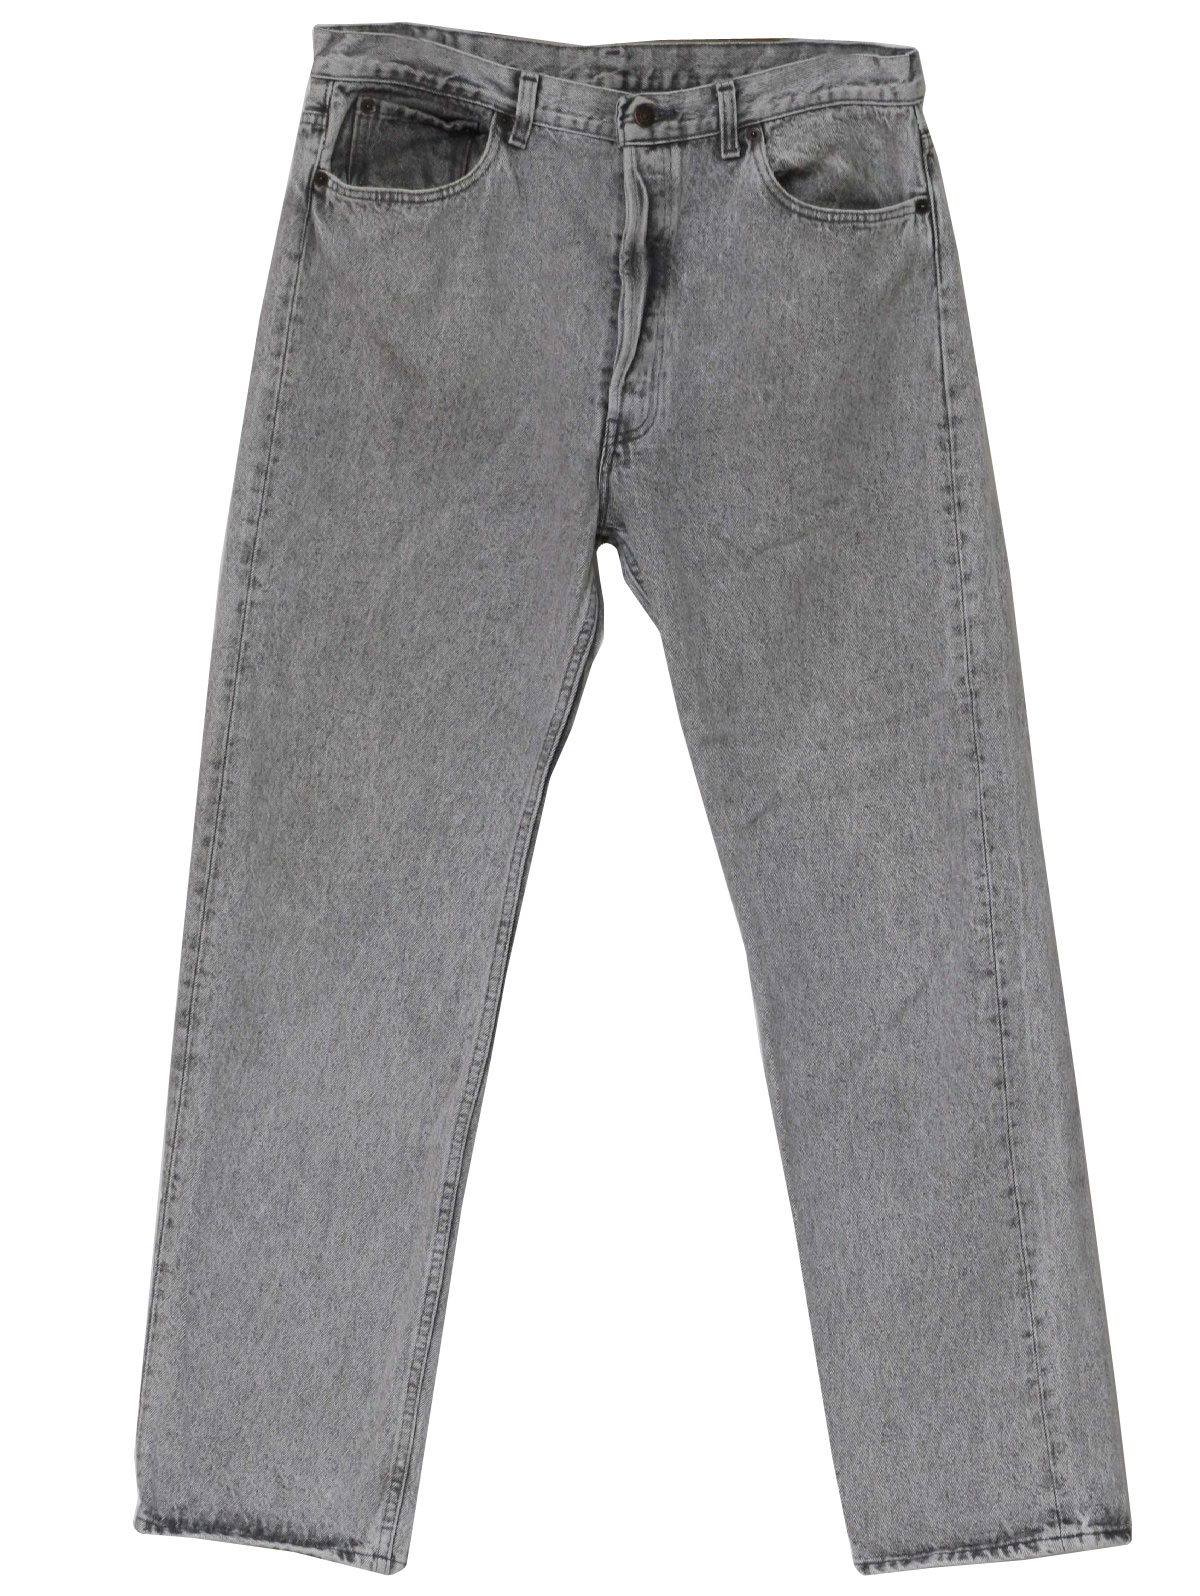 Levis Eighties Vintage Pants: 80s -Levis- Mens grey cotton denim acid ...